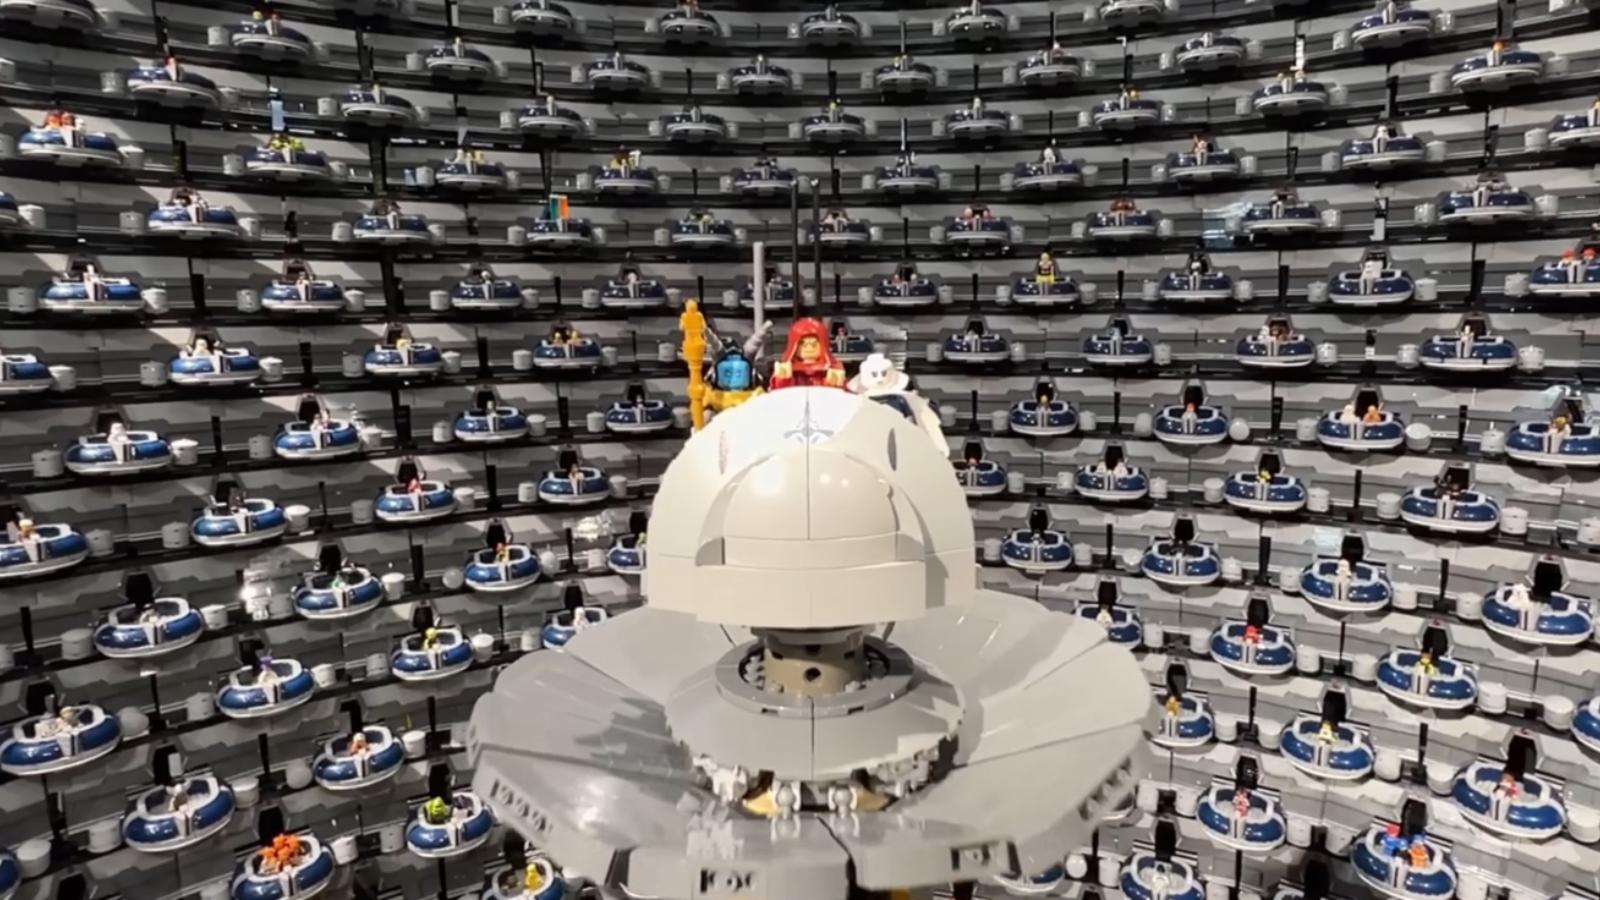 Lego Star Wars Galactic Senate